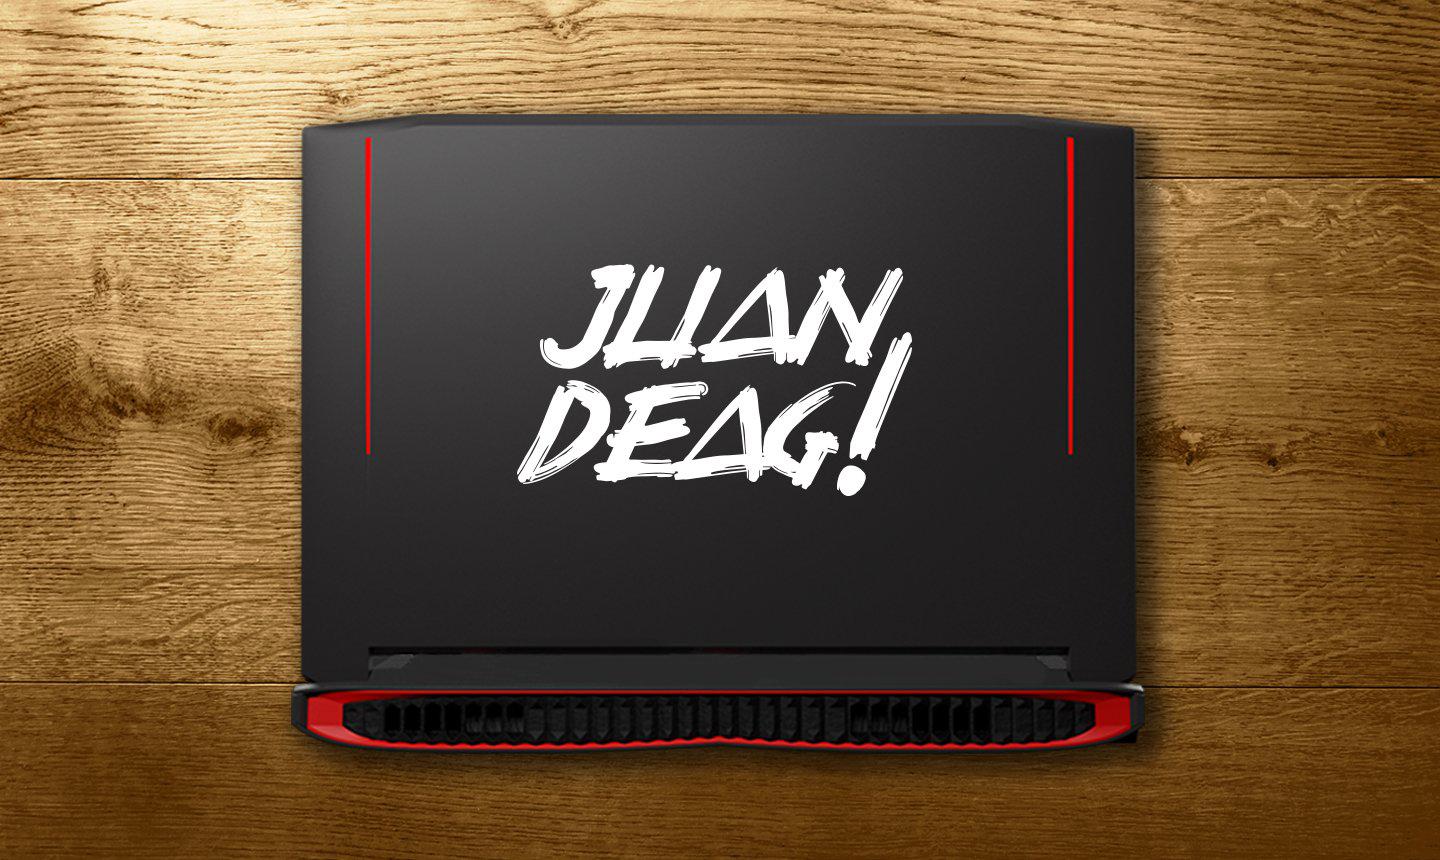 Juan Deag - make it stick